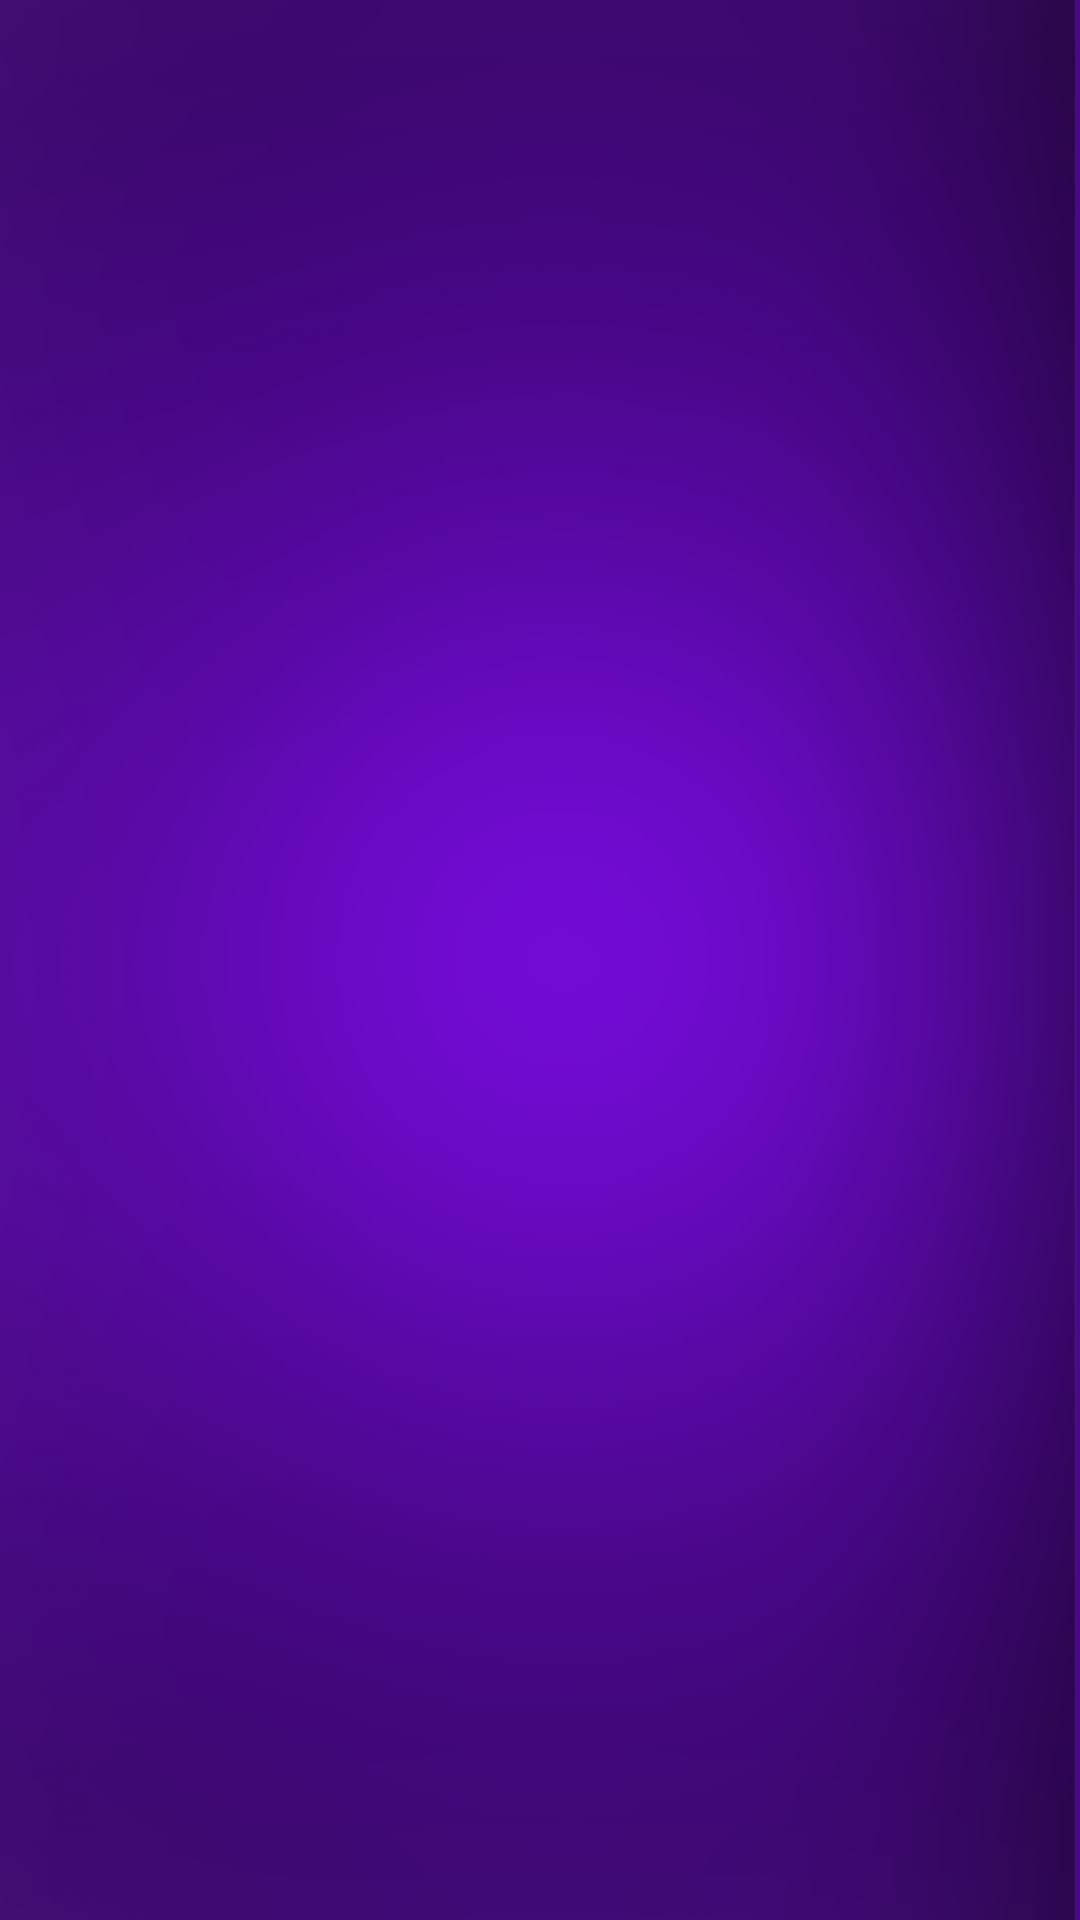 Sleek Violet Iphone With Minimalist Design Background